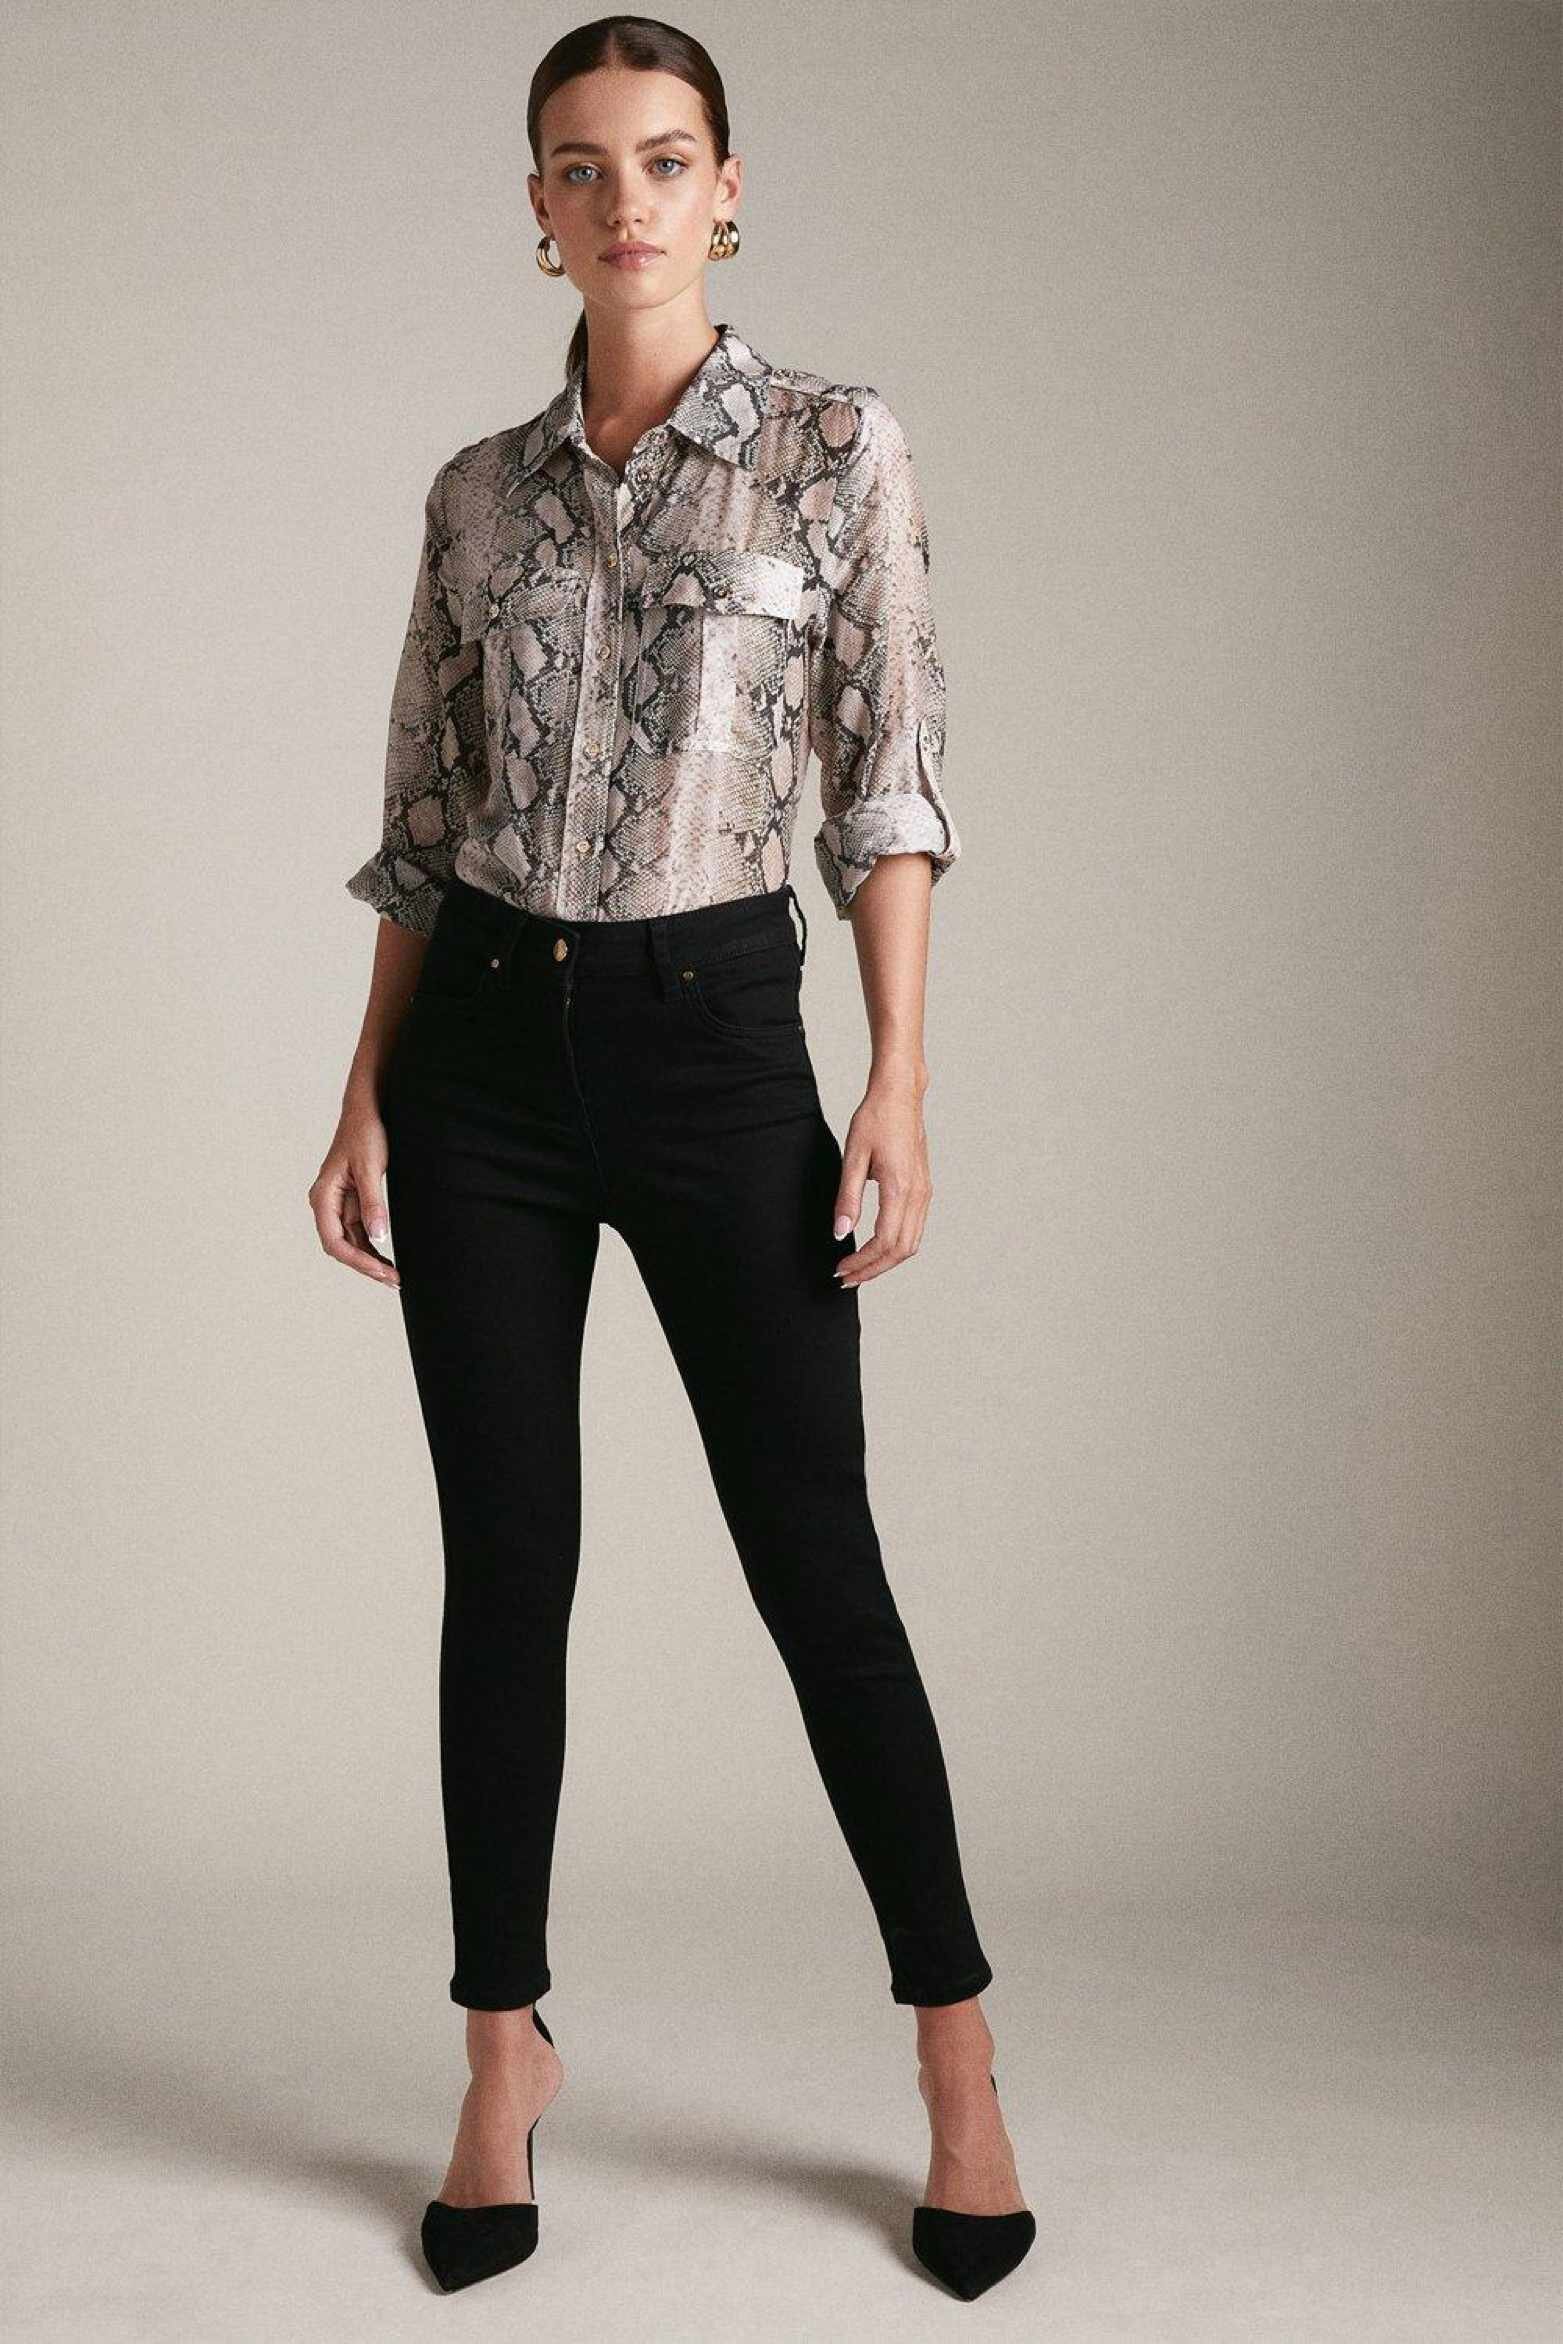 Karen Millen Petite Luxe Cut High Rise Skinny Jeans £39.20